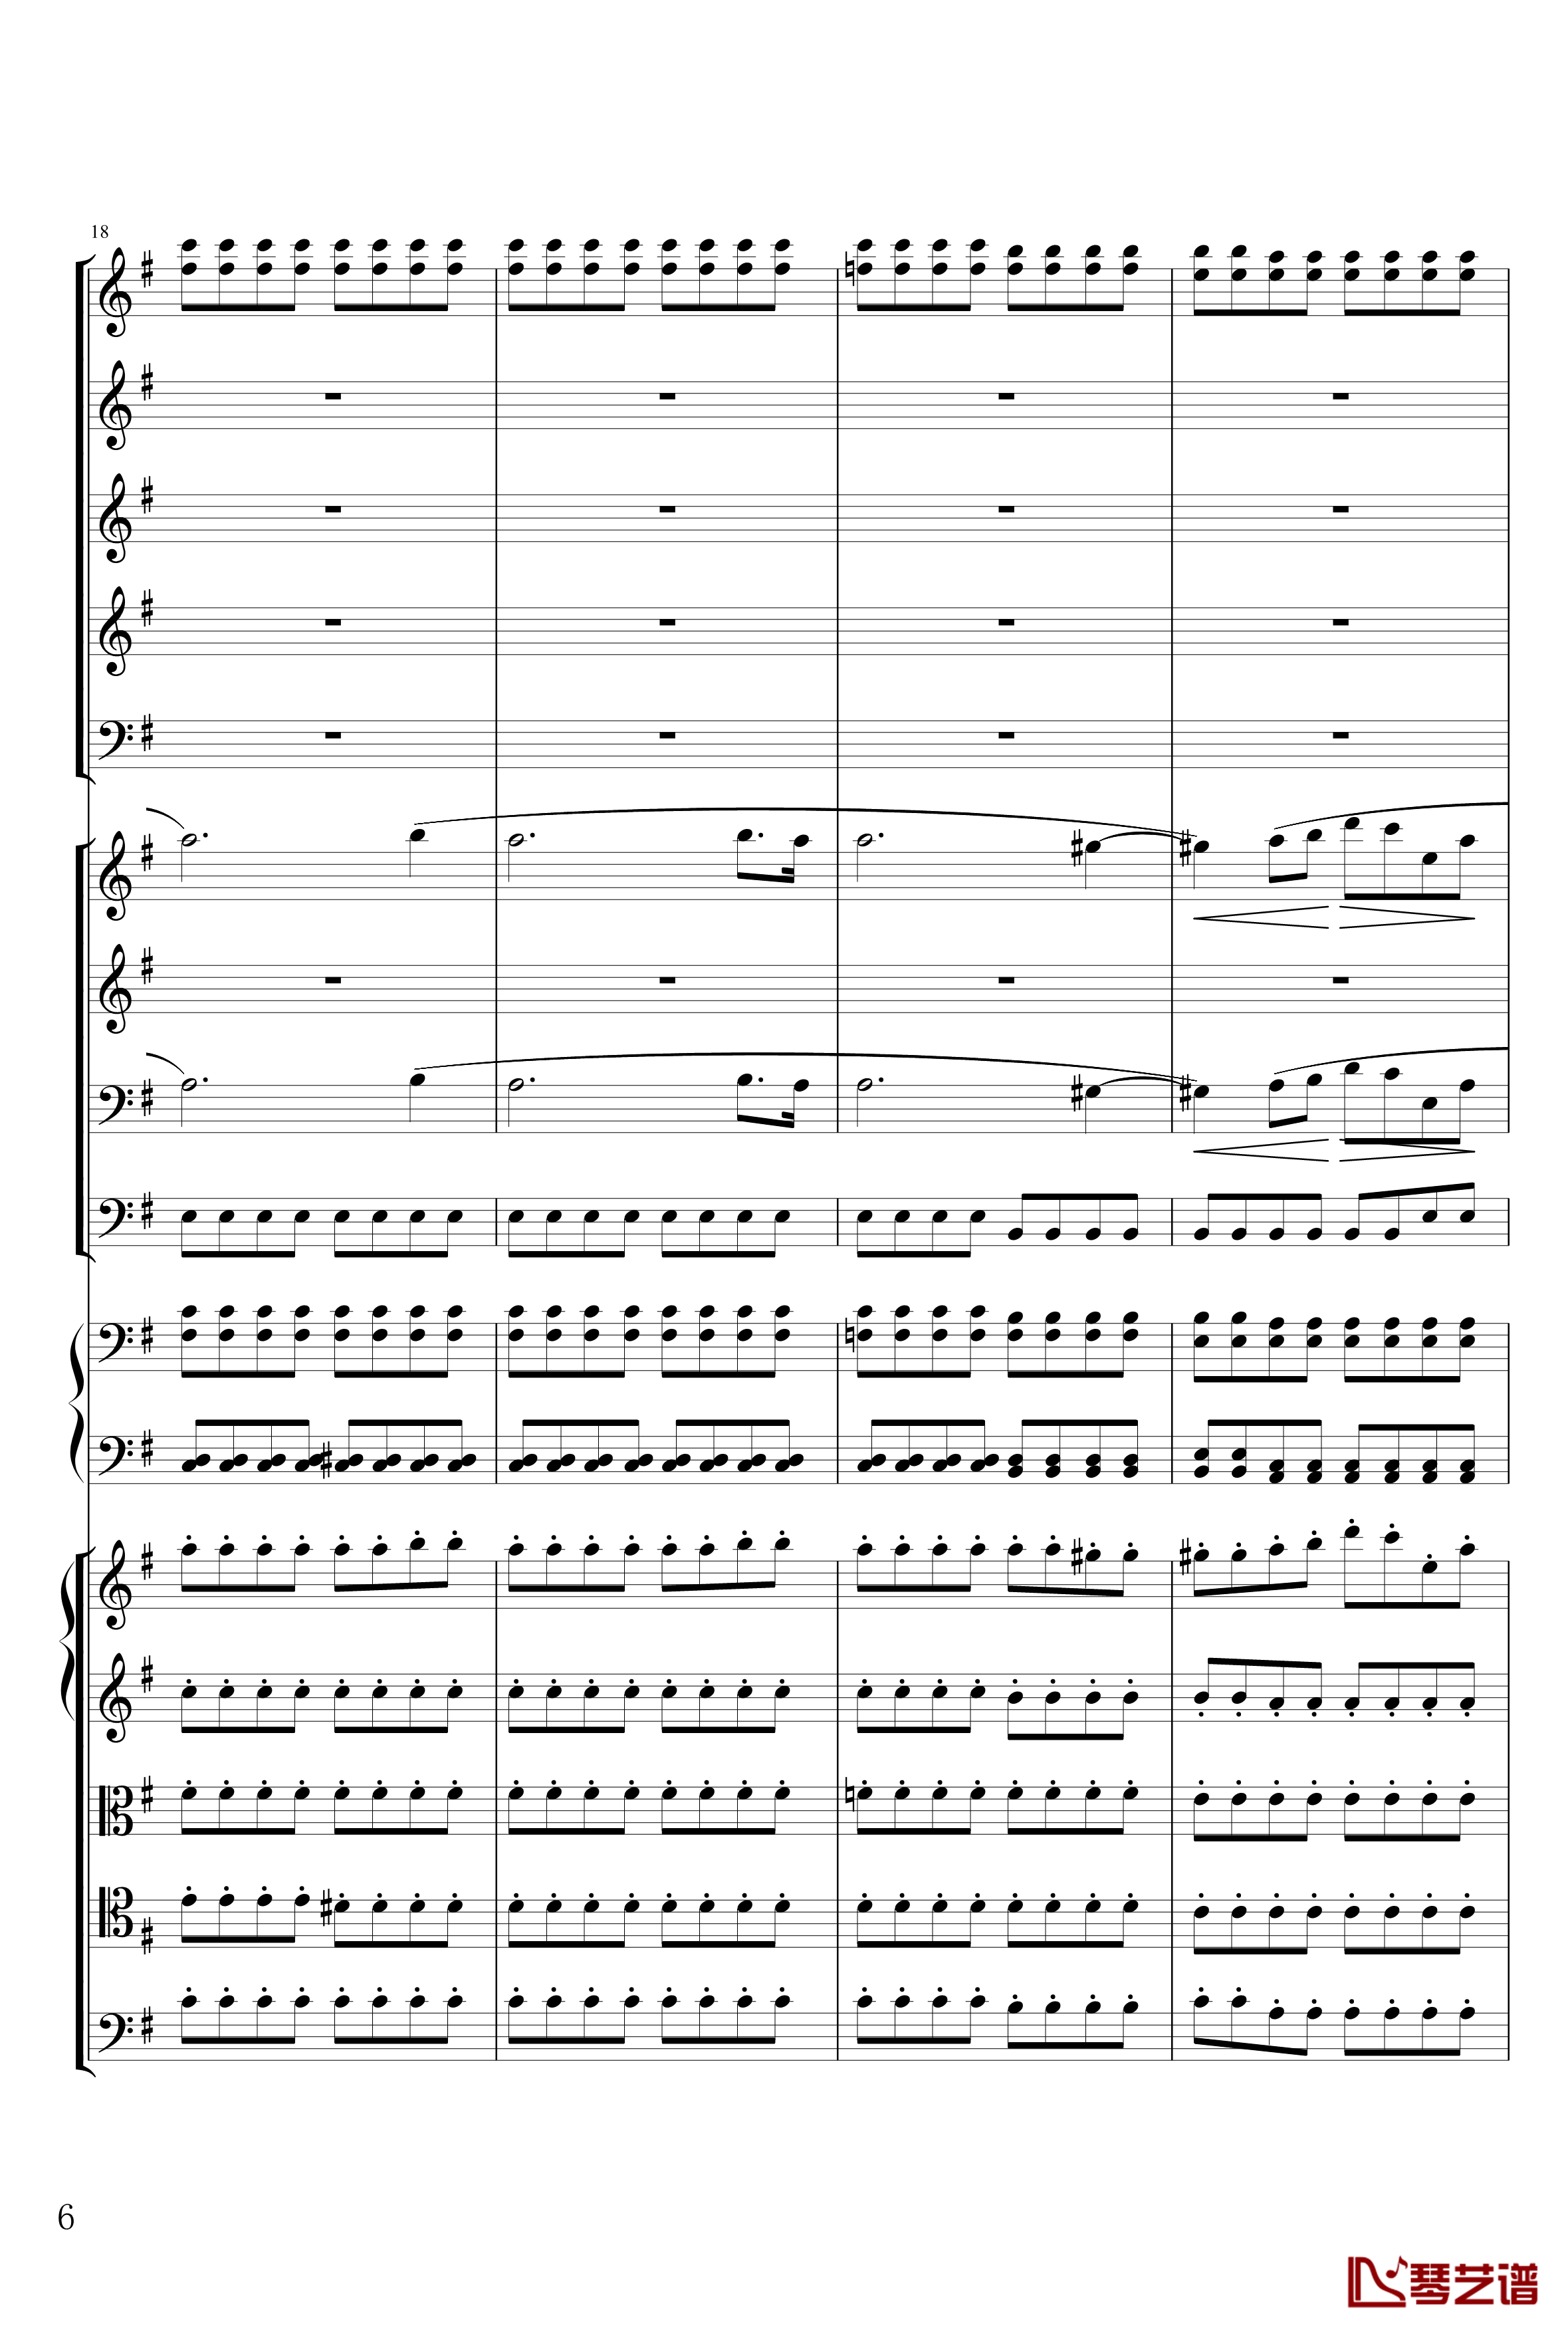 E小调前奏曲钢琴谱-交响乐版-肖邦-chopin6